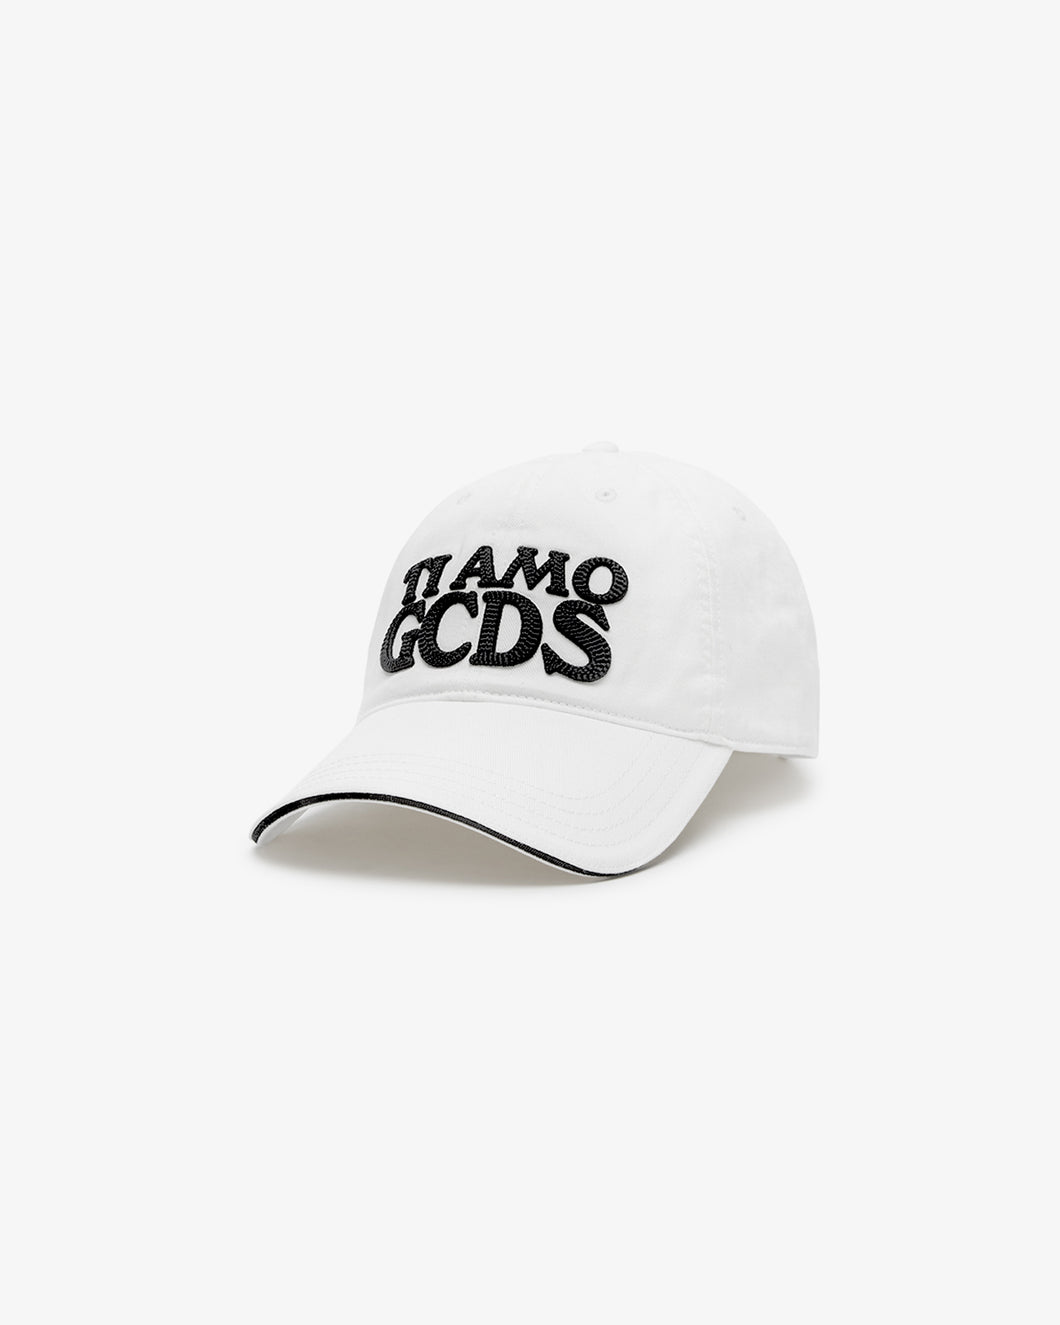 Ti Amo Gcds Baseball Hat